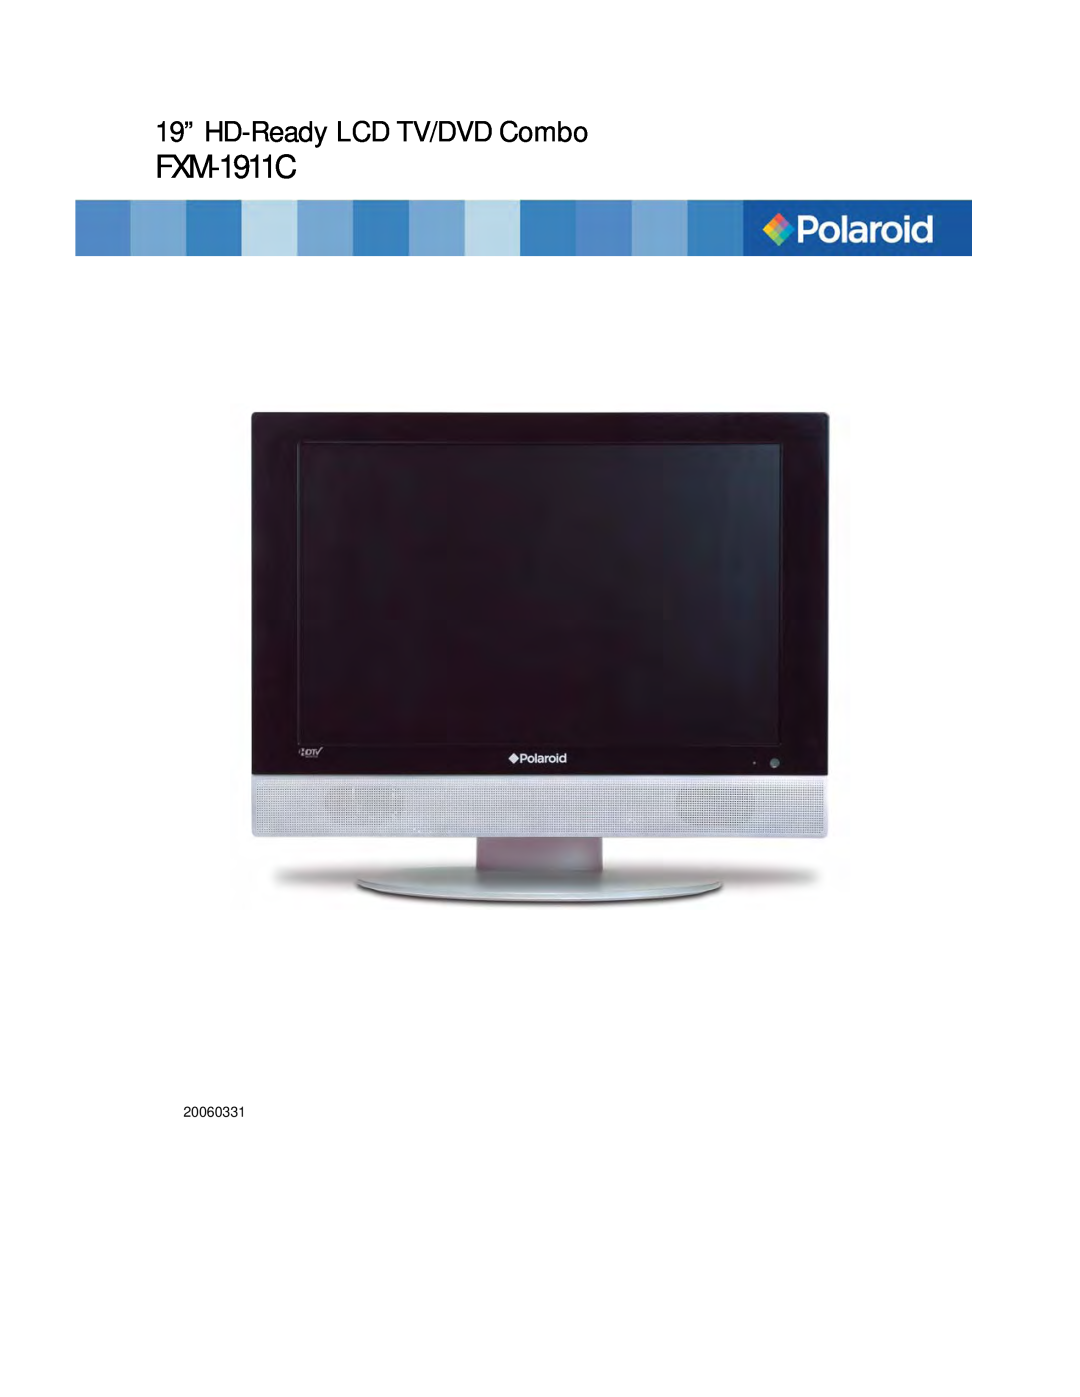 Polaroid FXM-1911C manual 19” HD-Ready LCD TV/DVD Combo, 20060331 